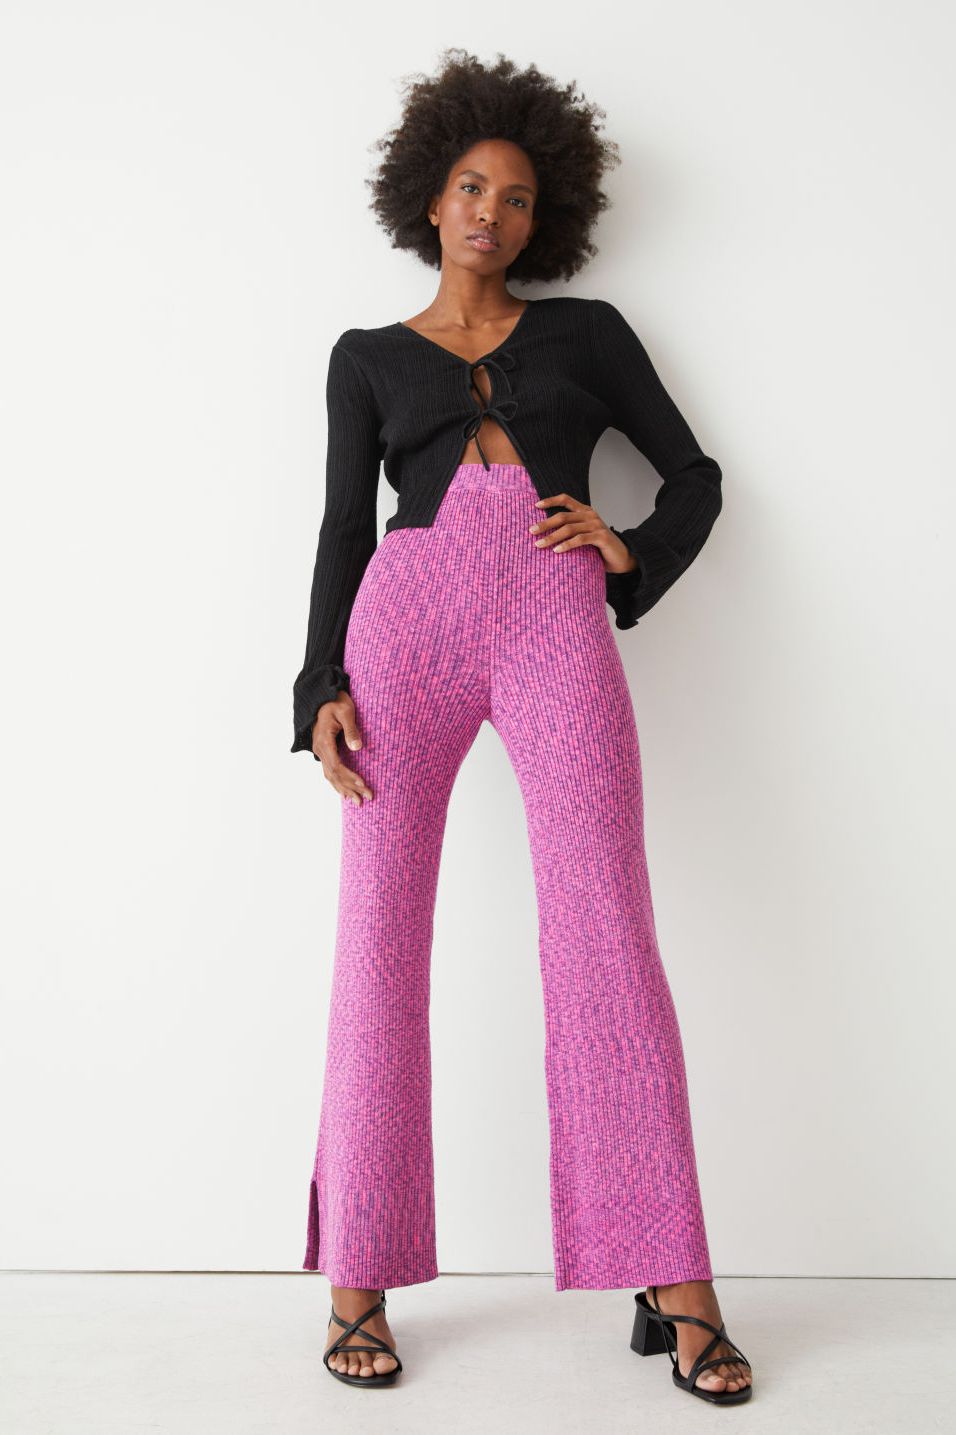 Rib-knit flared trousers